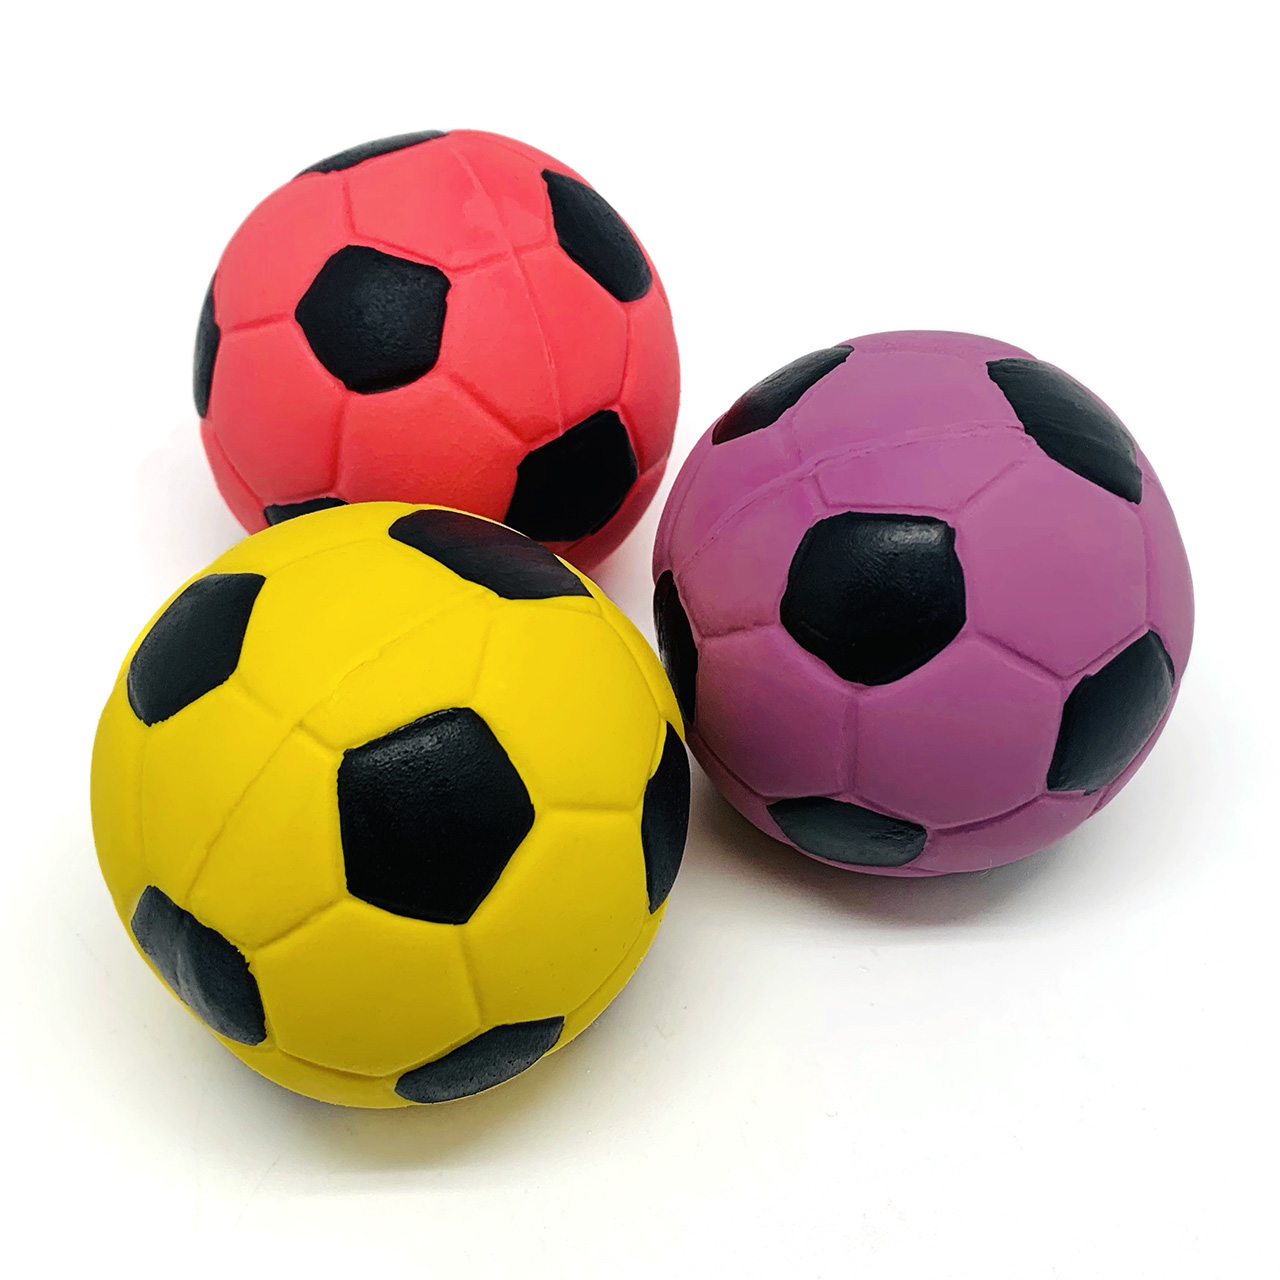 Chiwava 3 件装 2.7 英寸吱吱作响的乳胶橡胶狗玩具球